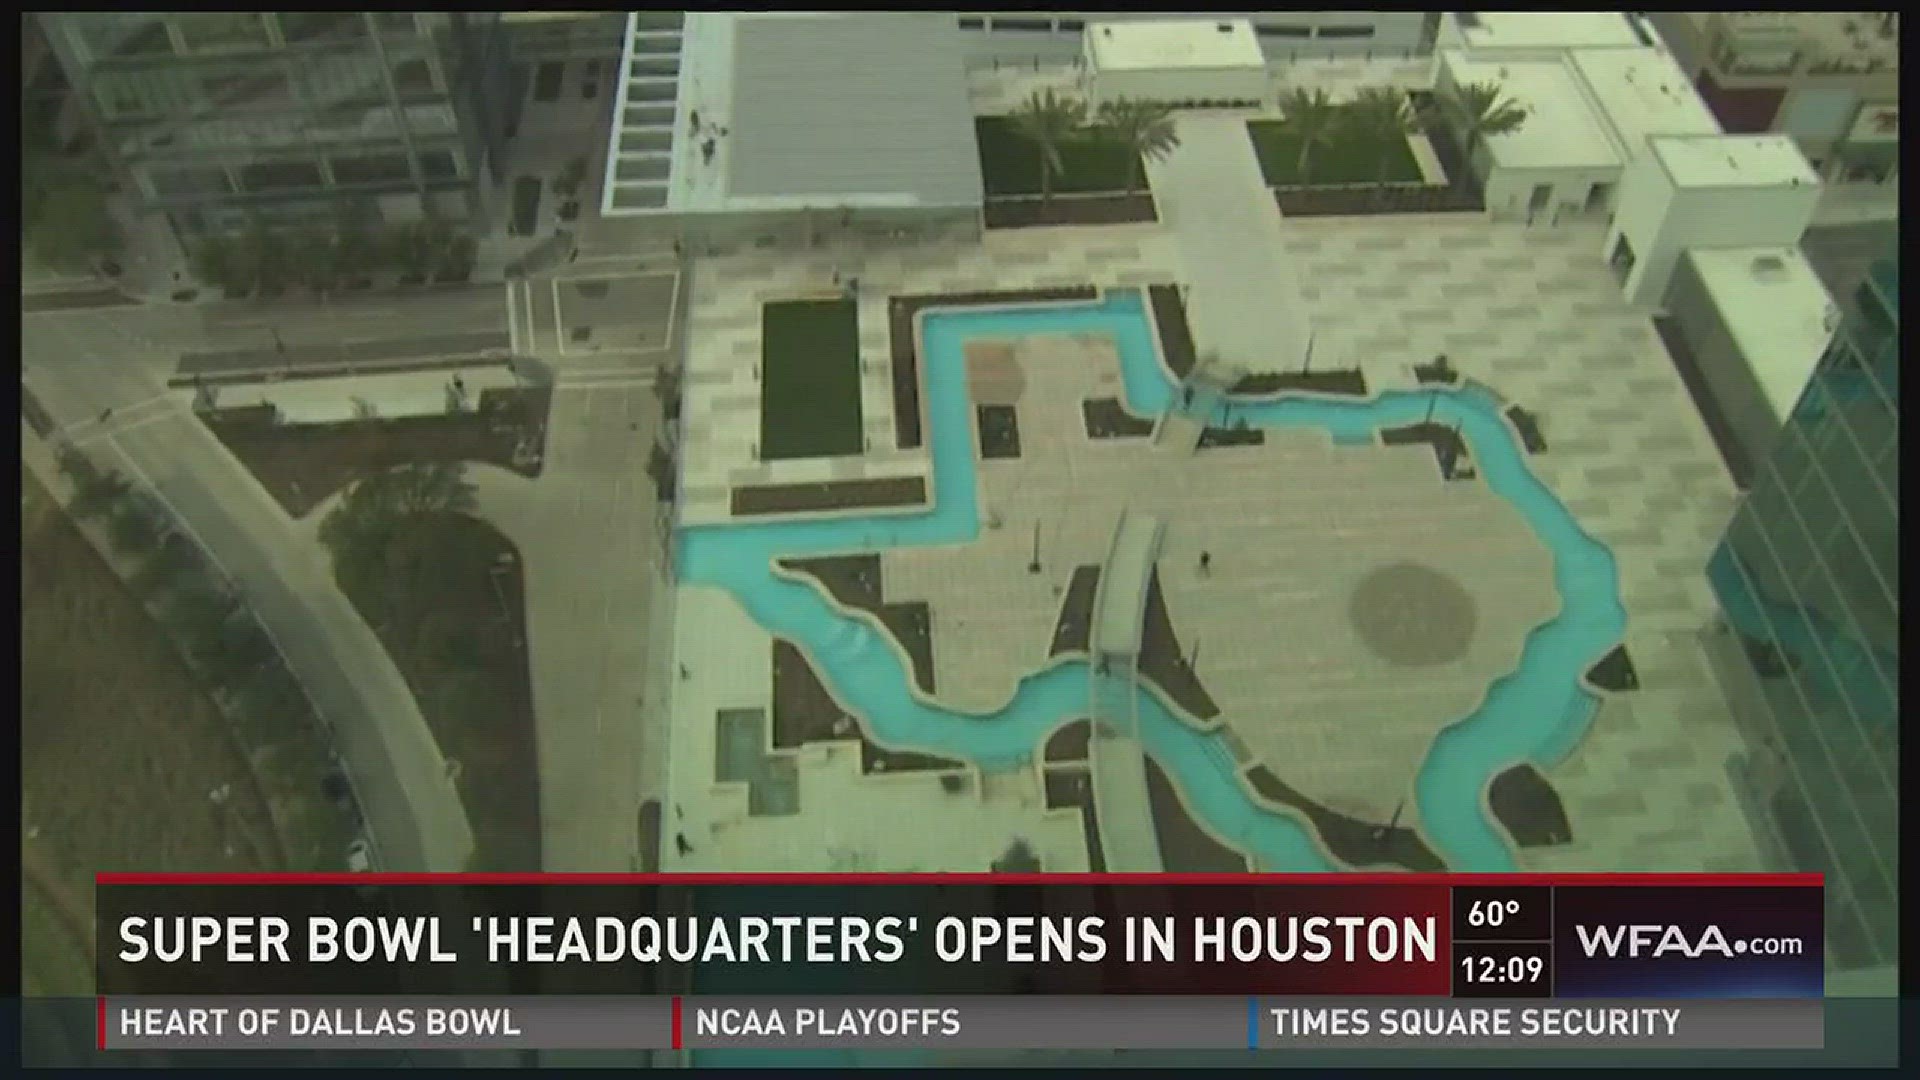 Super Bowl 'headquarters' opens in Houston